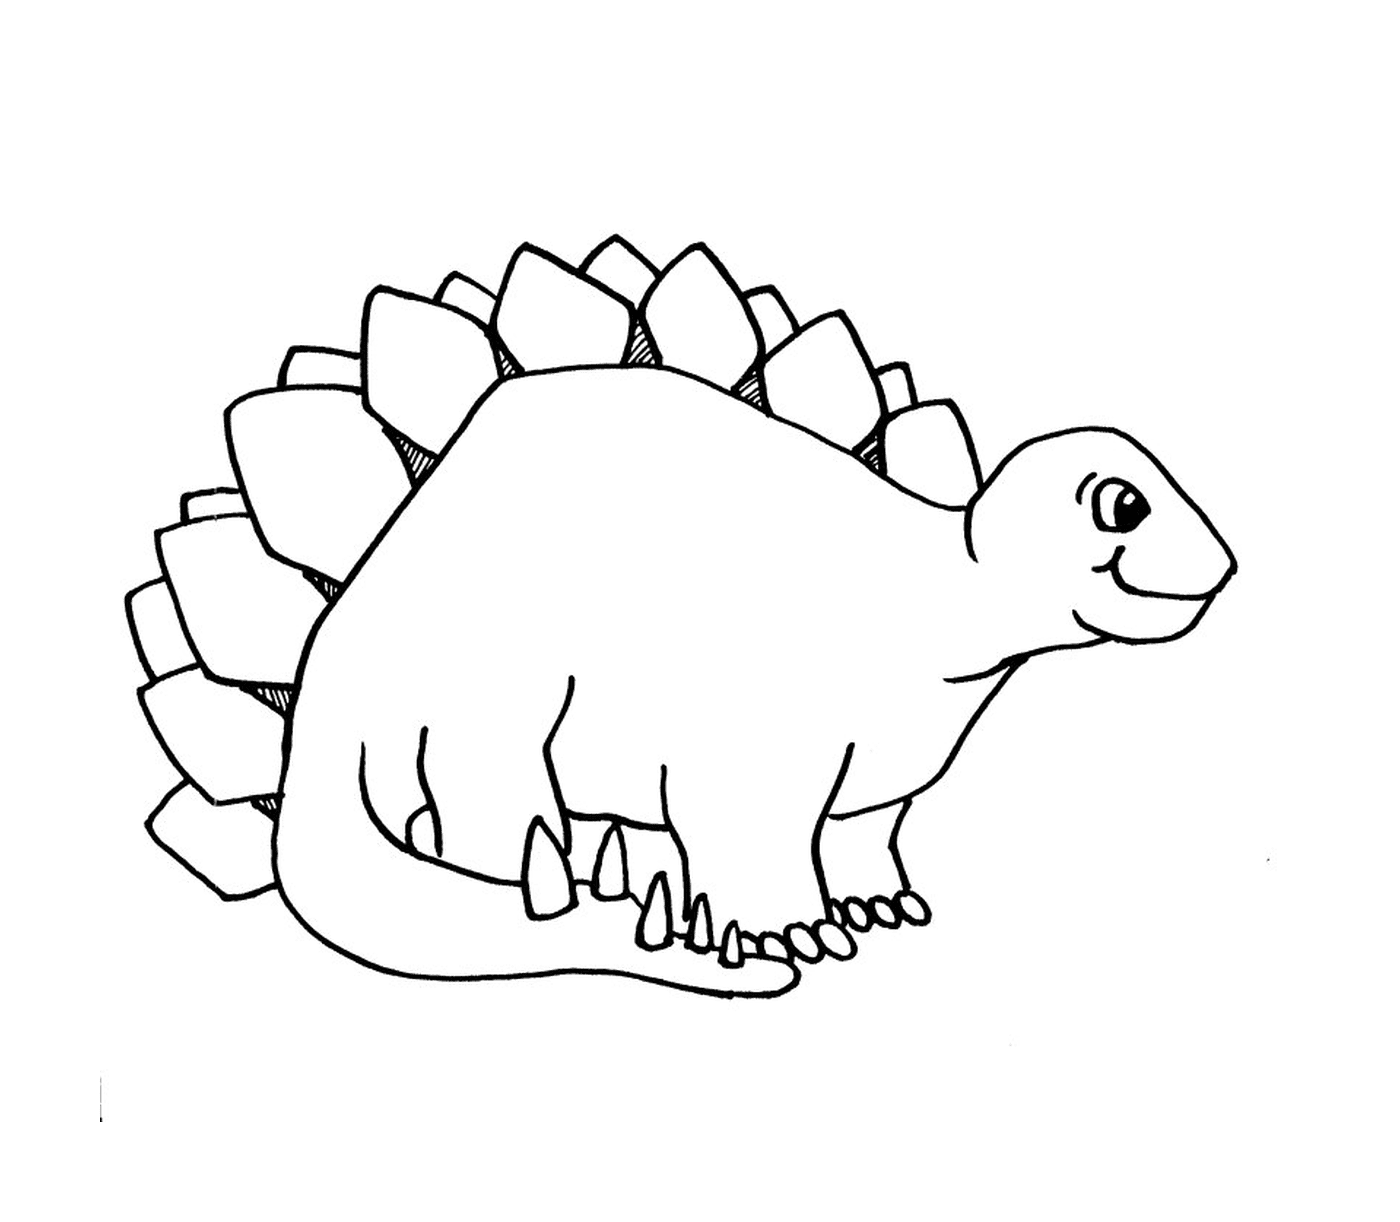  A stegosaurus 